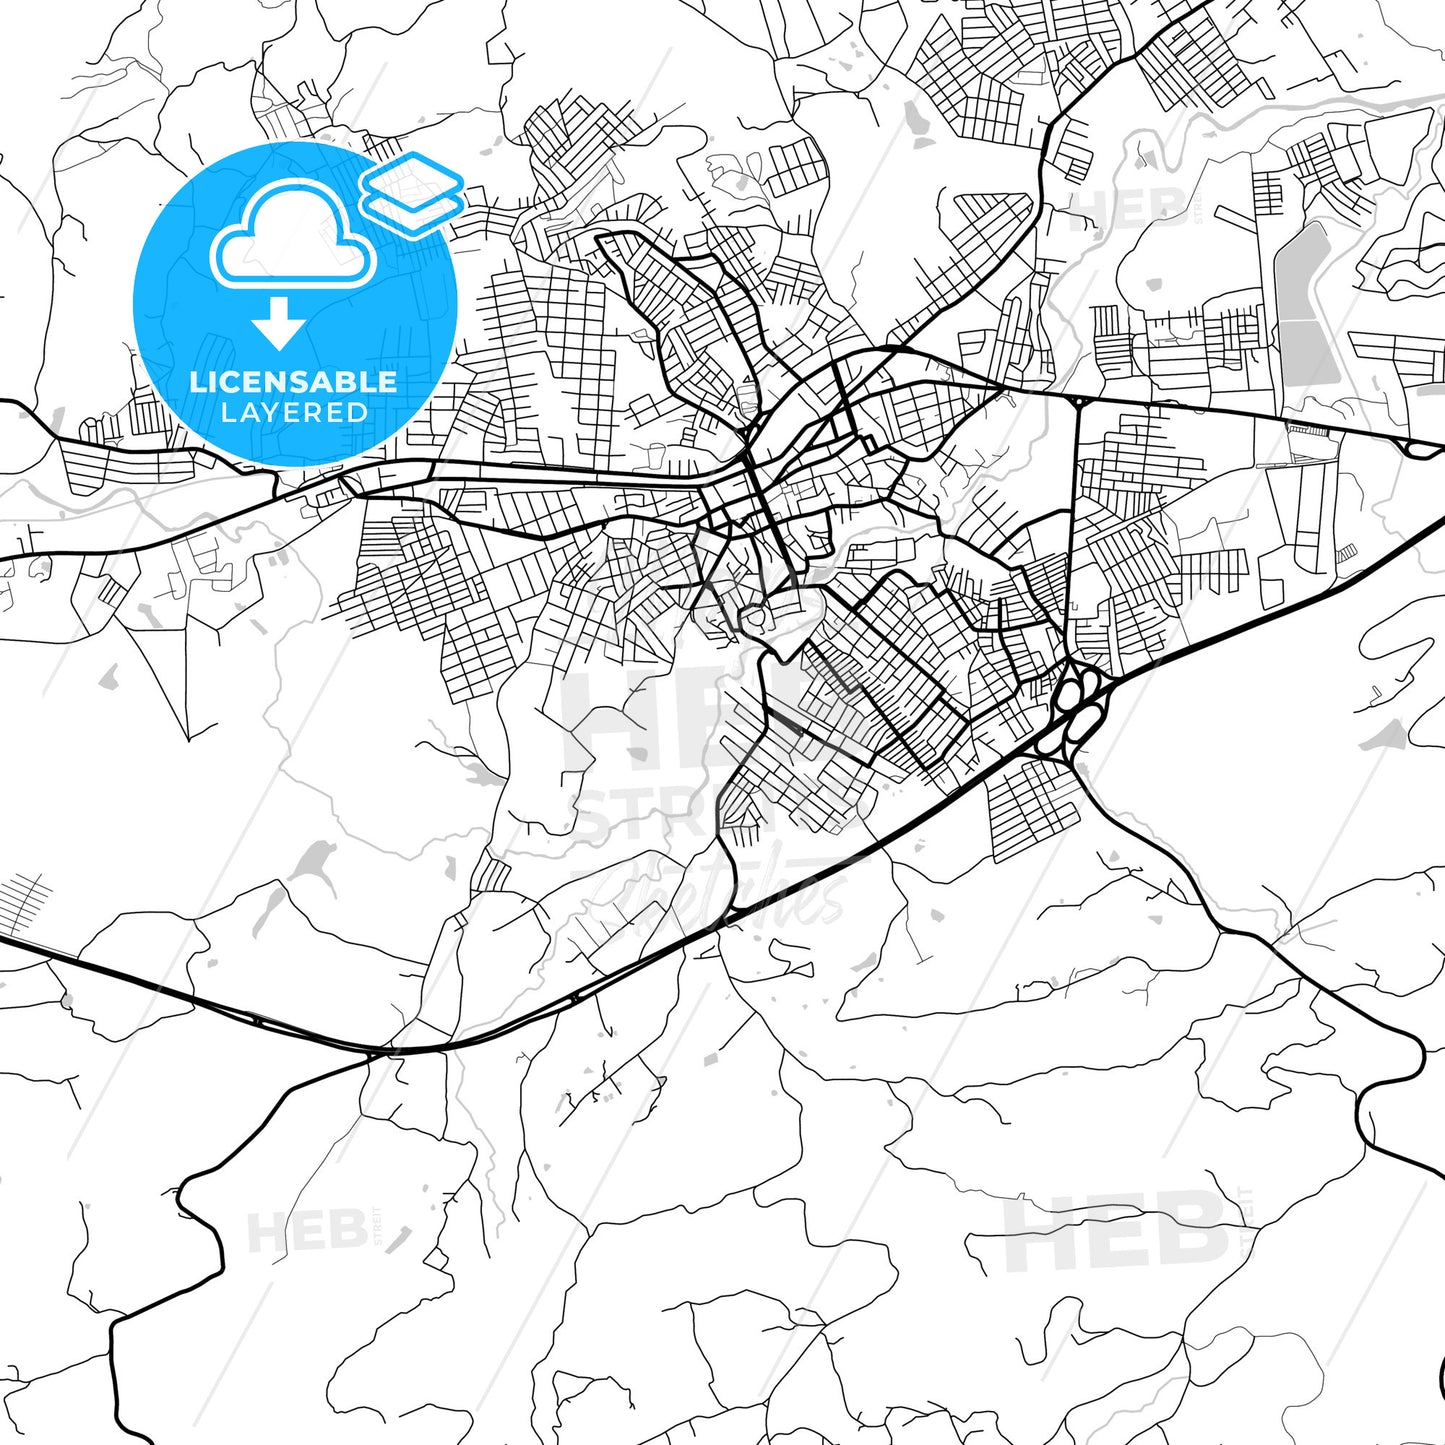 Layered PDF map of Vitoria de Santo Antao, Brazil